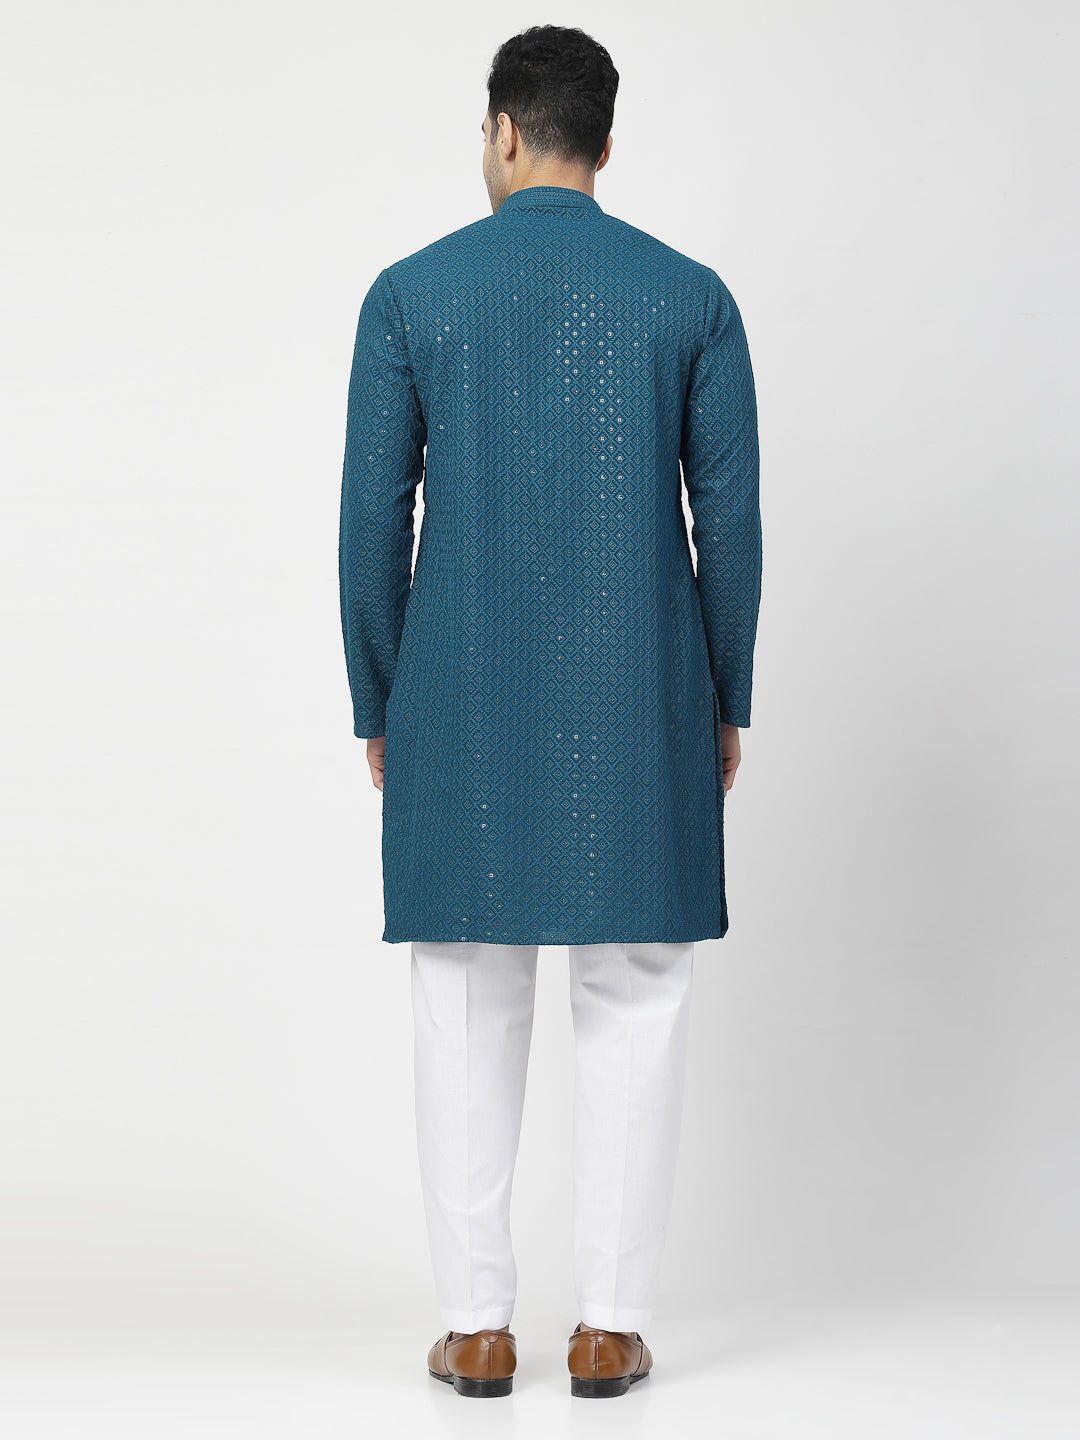 Men's Embroidery Cotton Blend Chikankari Kurta Set with White Pyjama (Teal Blue Color)